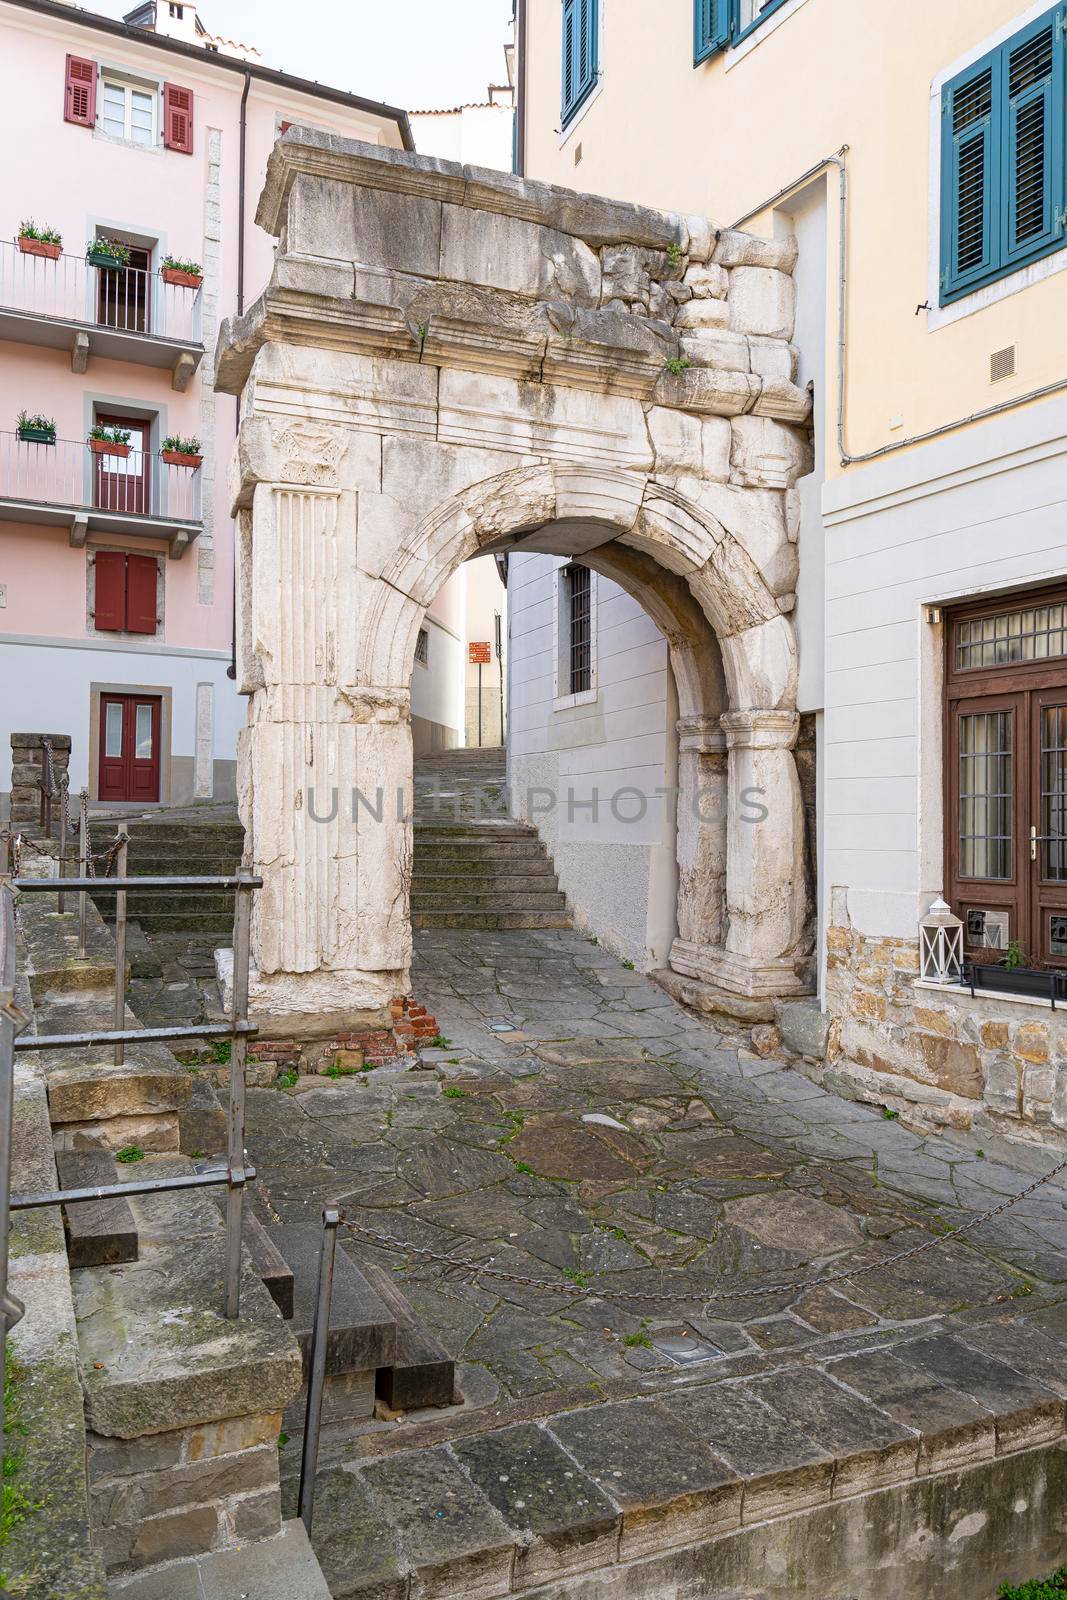 Arch of Riccardo in Trieste by sergiodv